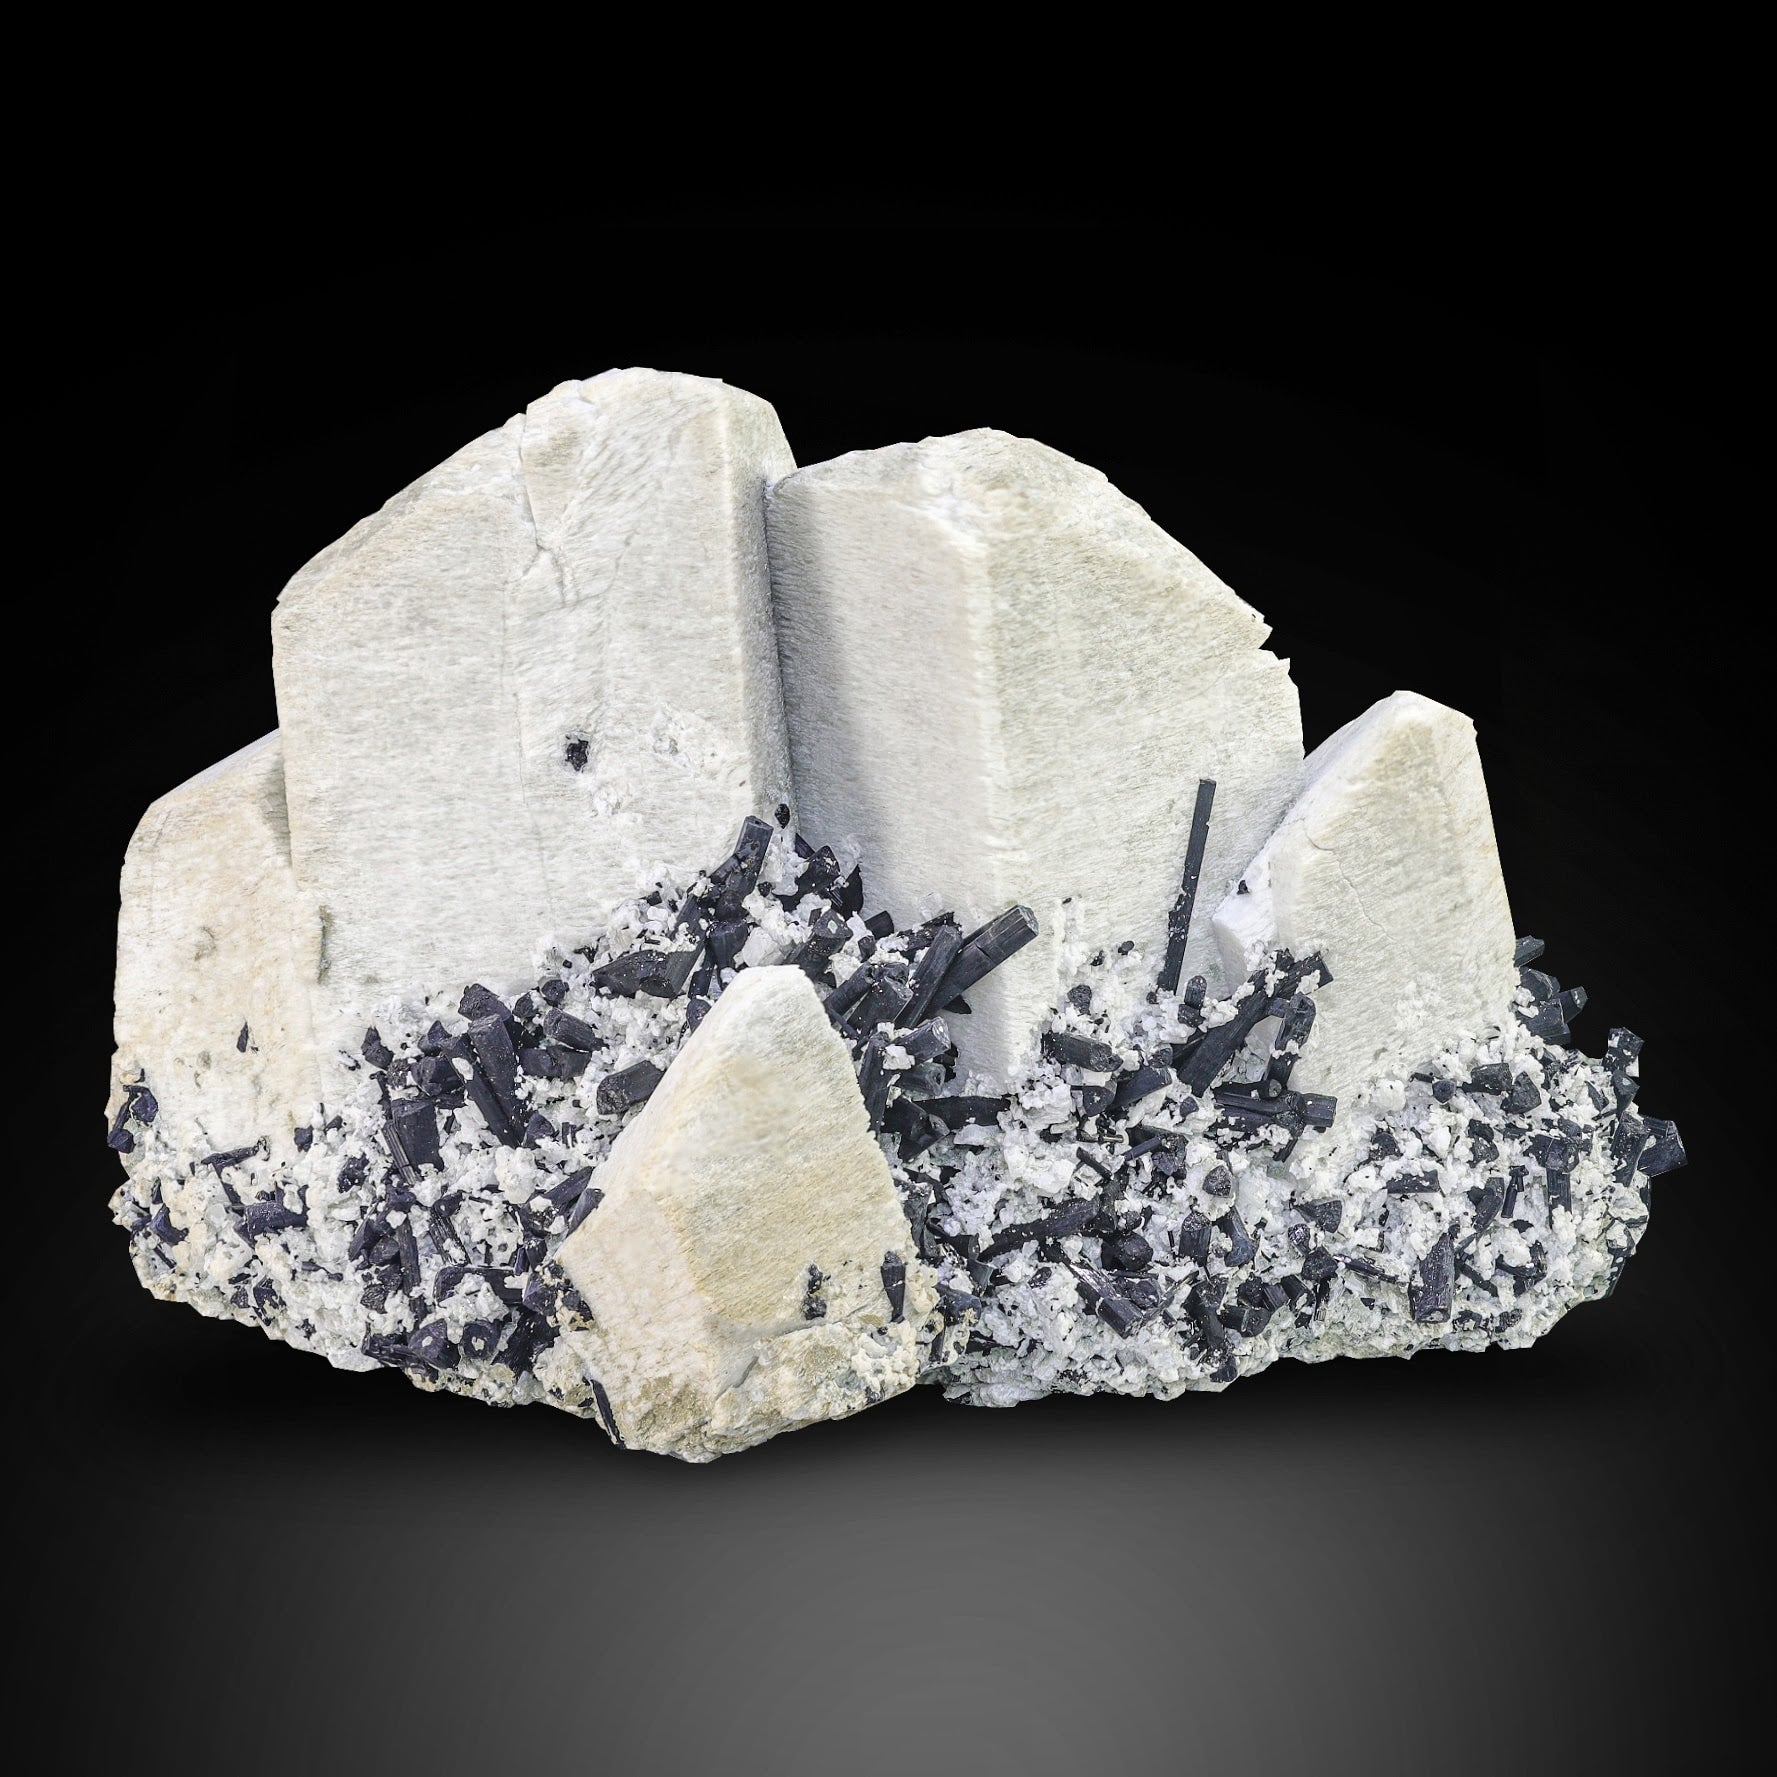 Aesthetic Microcline On Tourmaline and Quartz Crystal